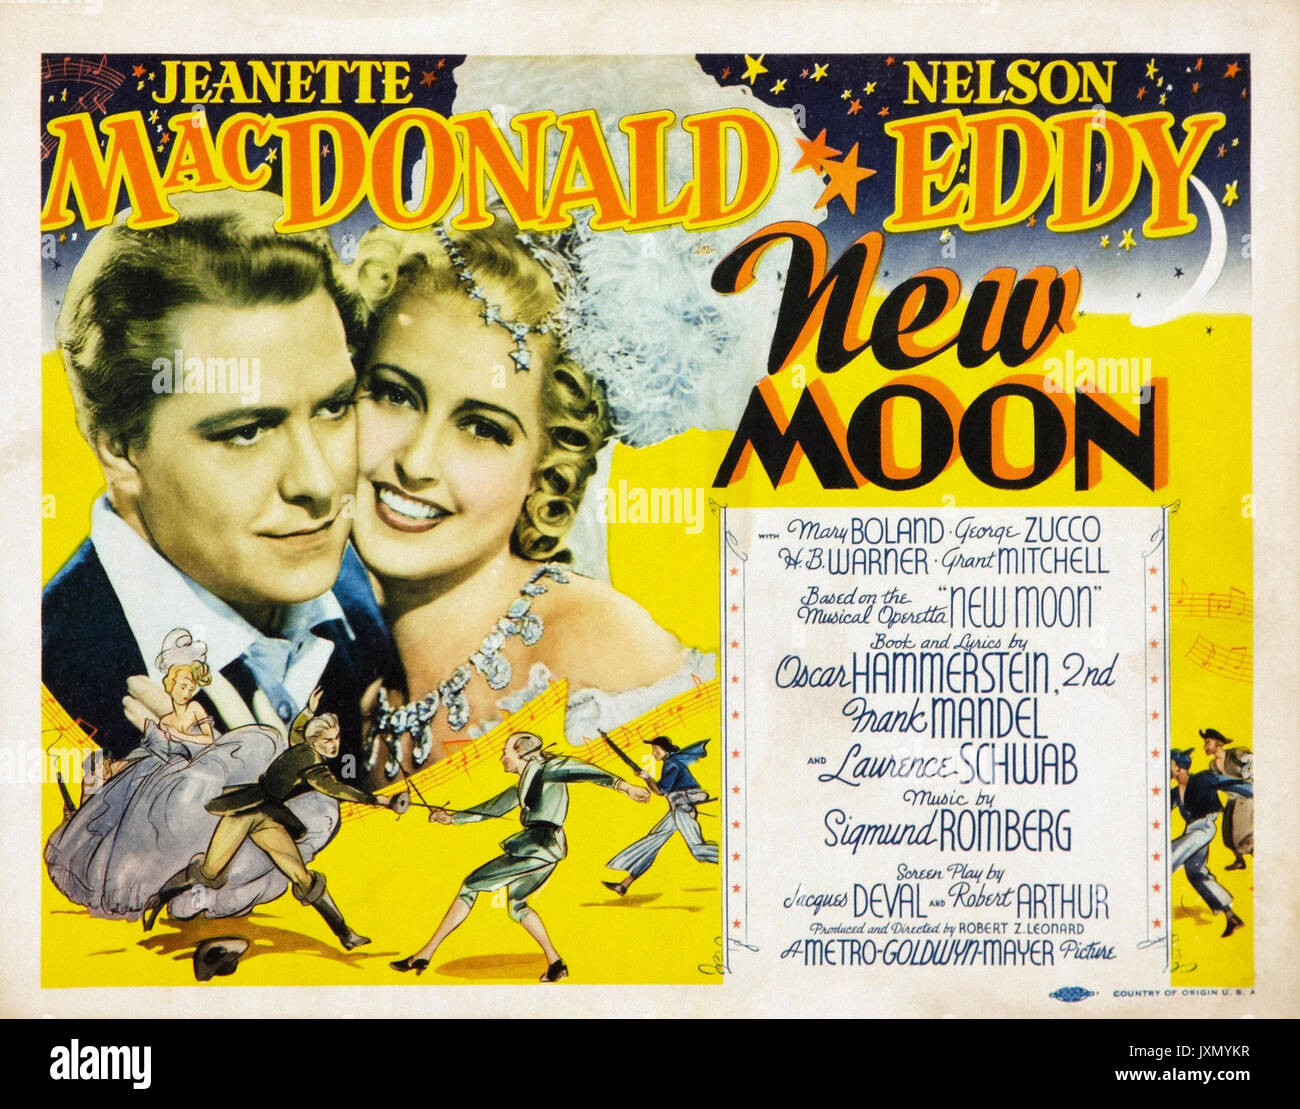 NEW MOON 1940 MGM Film mit Jeanette MacDonald und Nelson Eddy Stockfoto